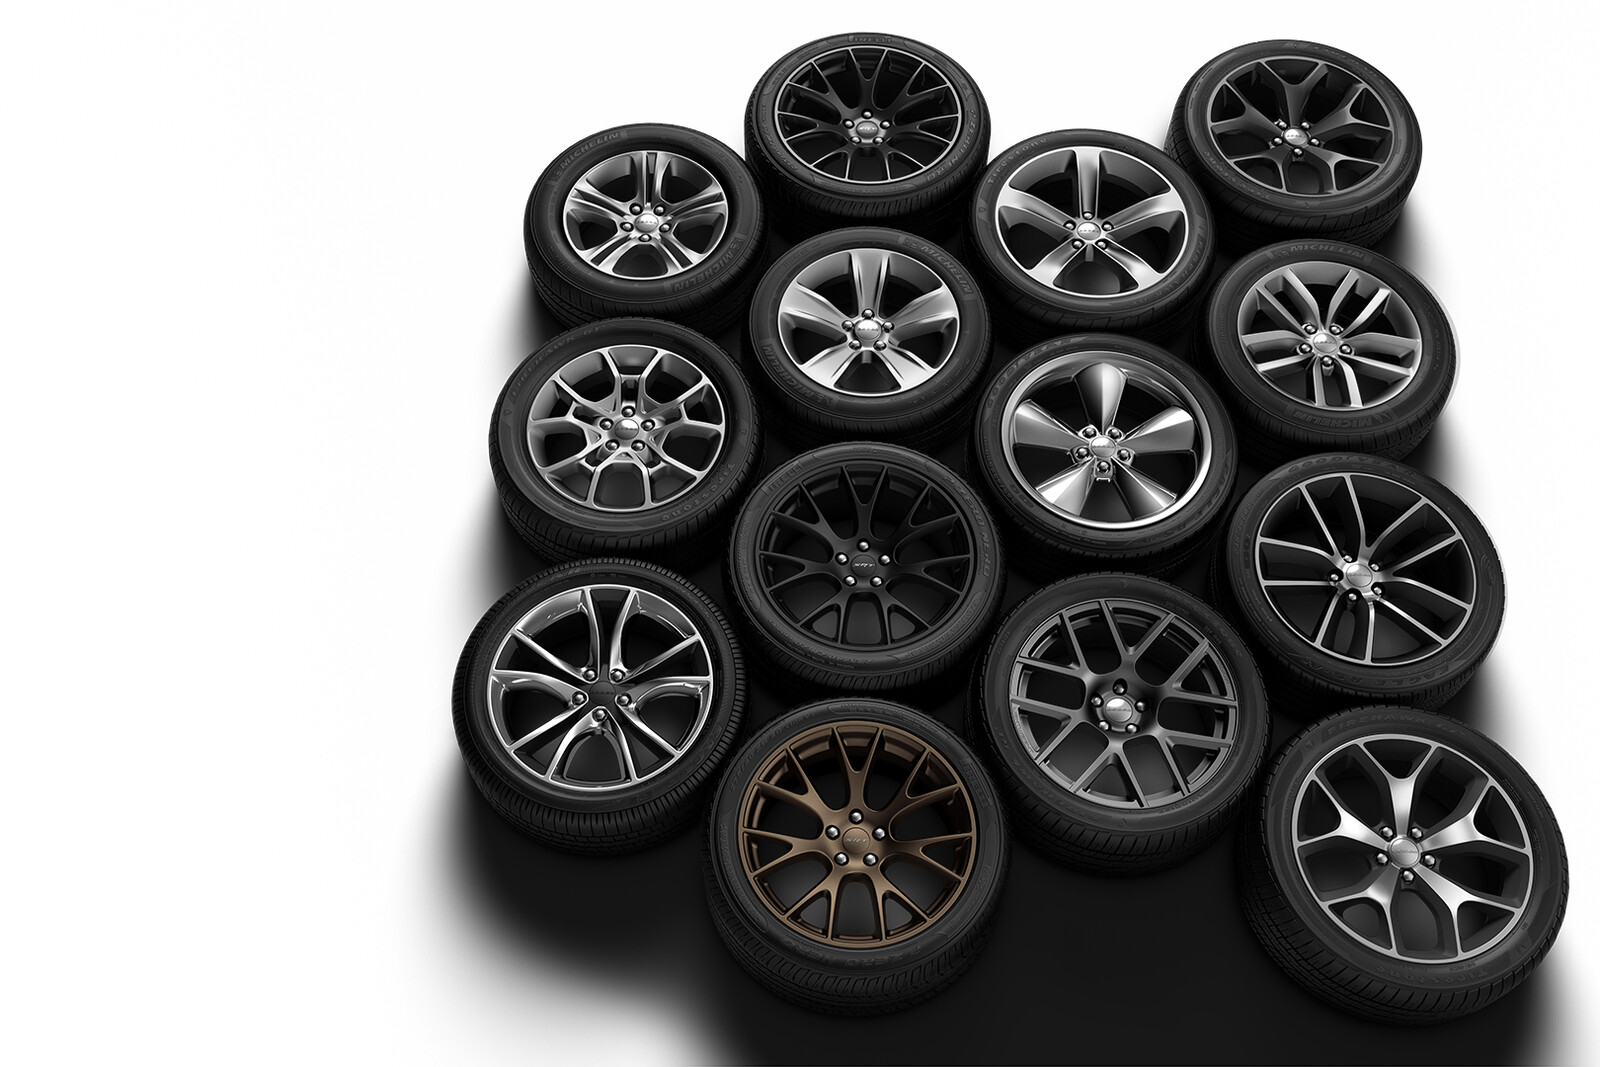 Dodge Challenger Wheels &amp; Tires: Fully CG
Tasks: Materials, Lighting, &amp; Retouching